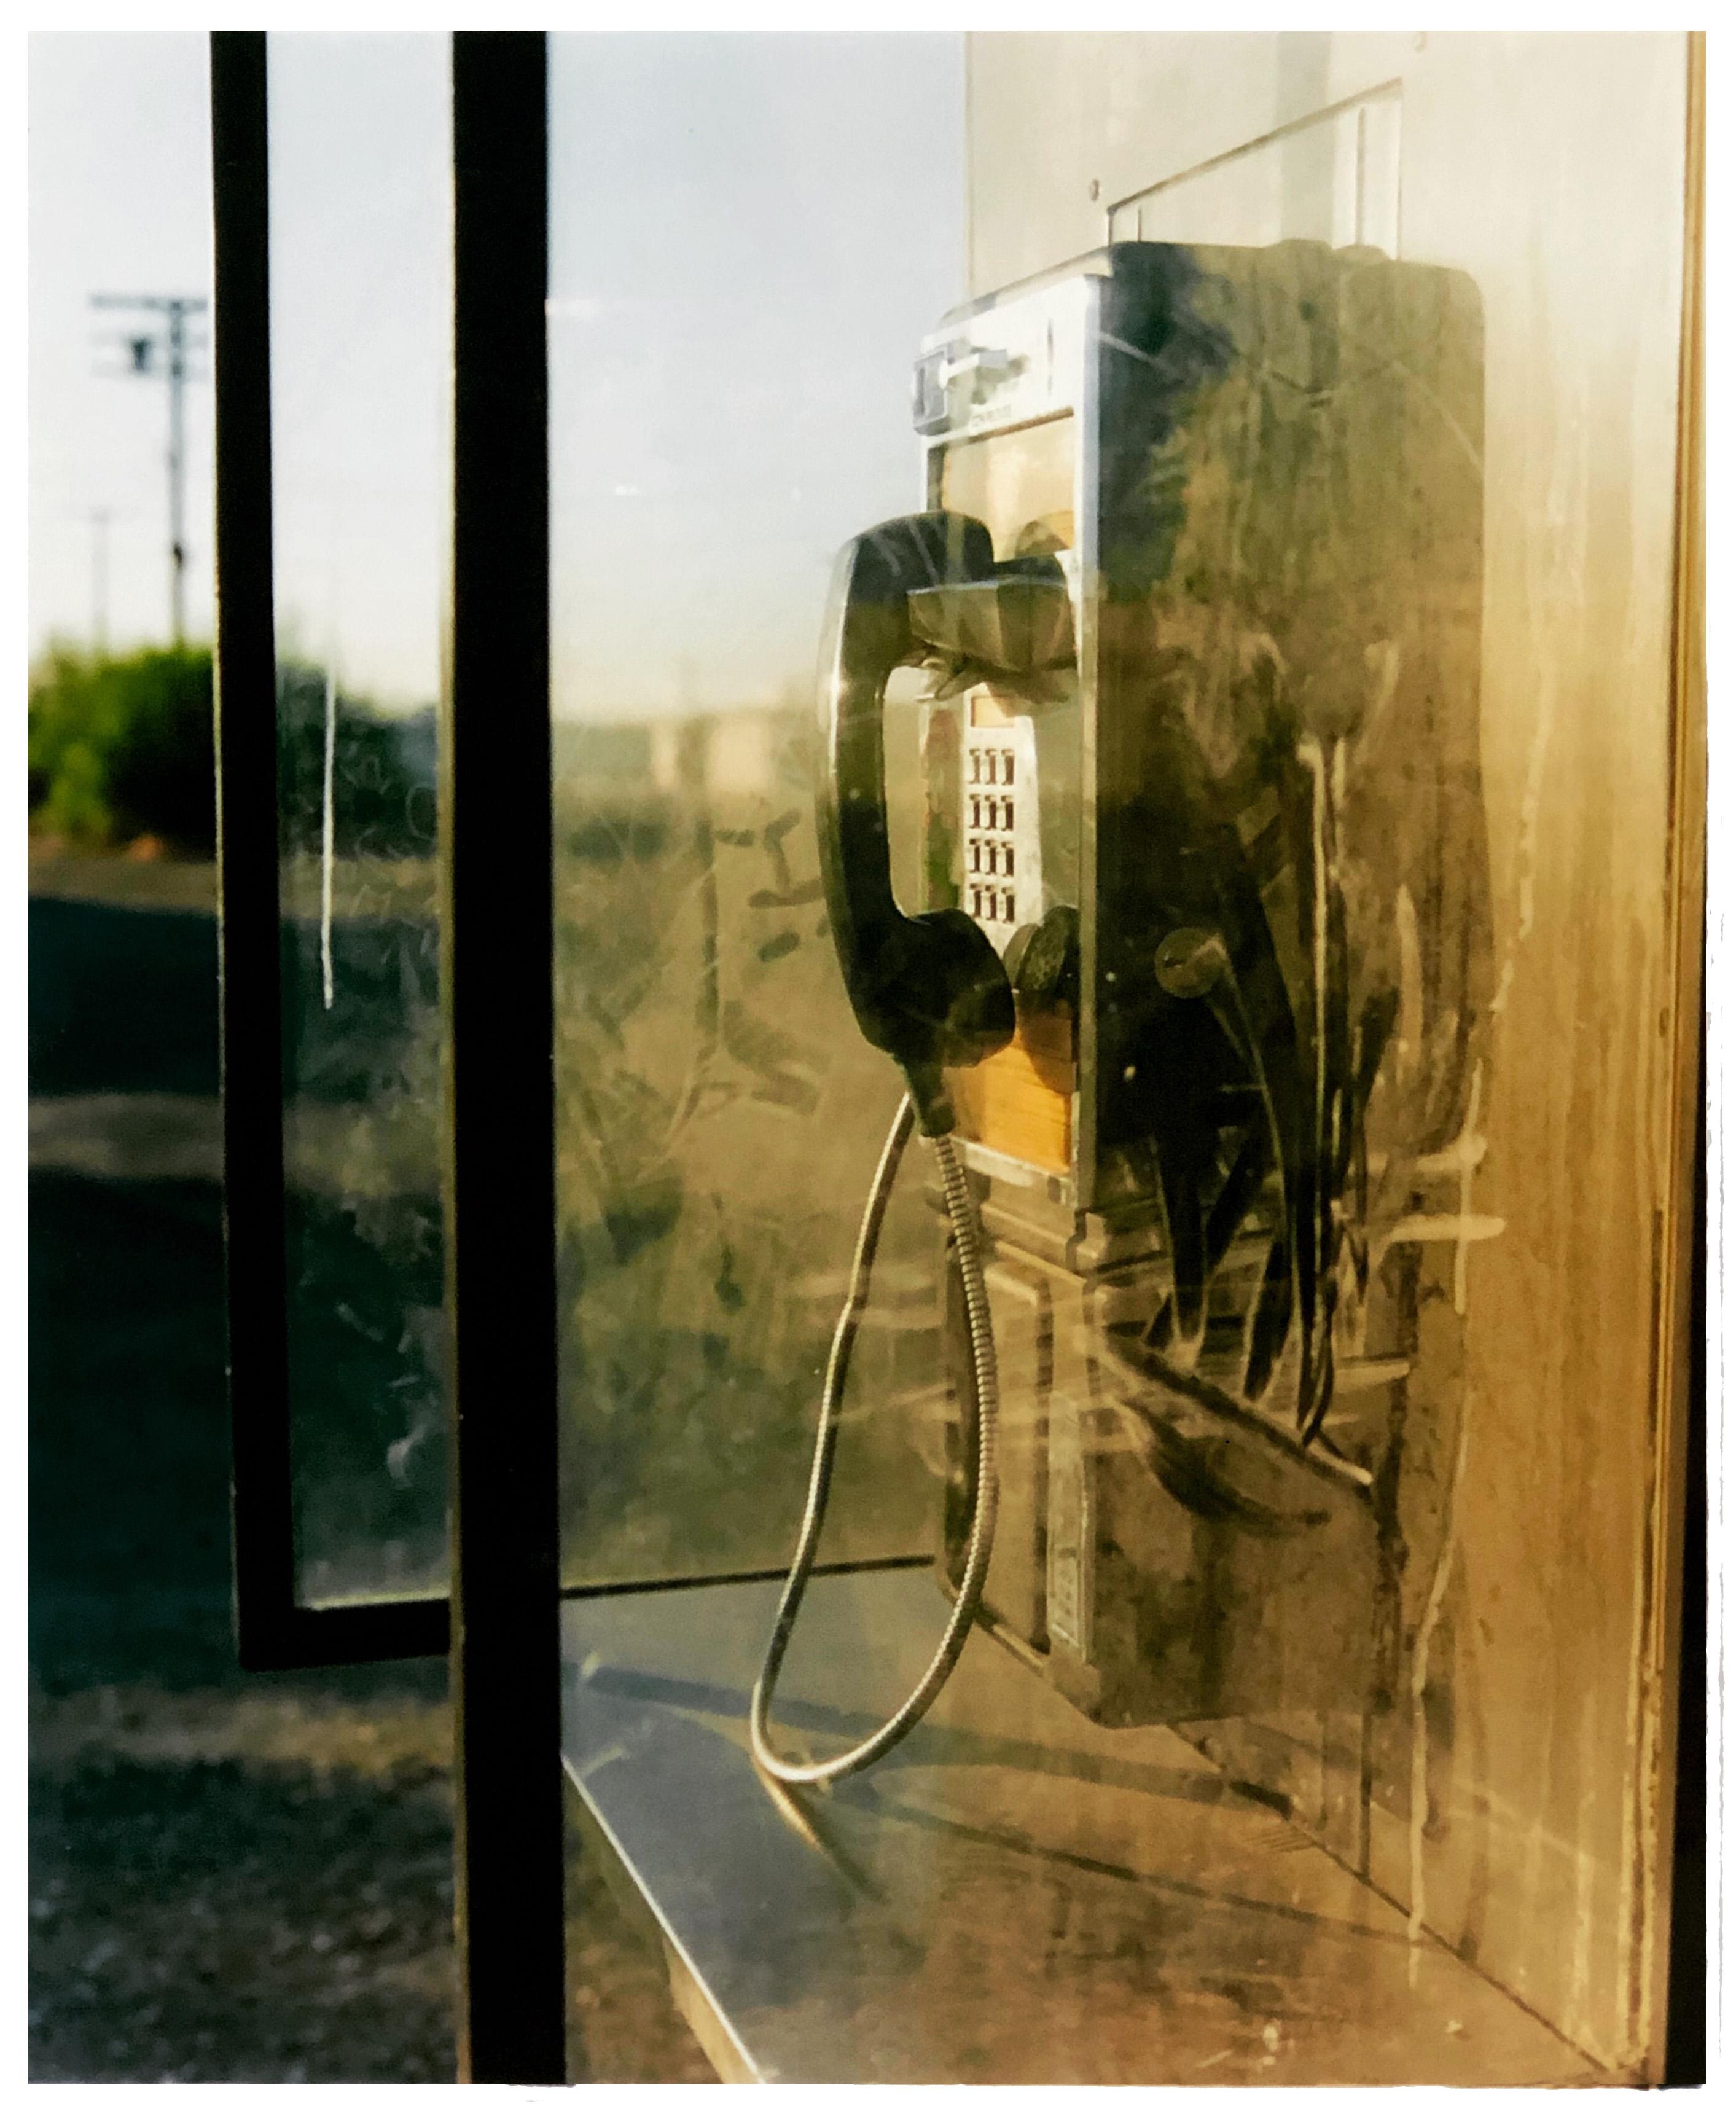 Richard Heeps Color Photograph – Call Box, Salton City, Kalifornien – amerikanische Farbfotografie